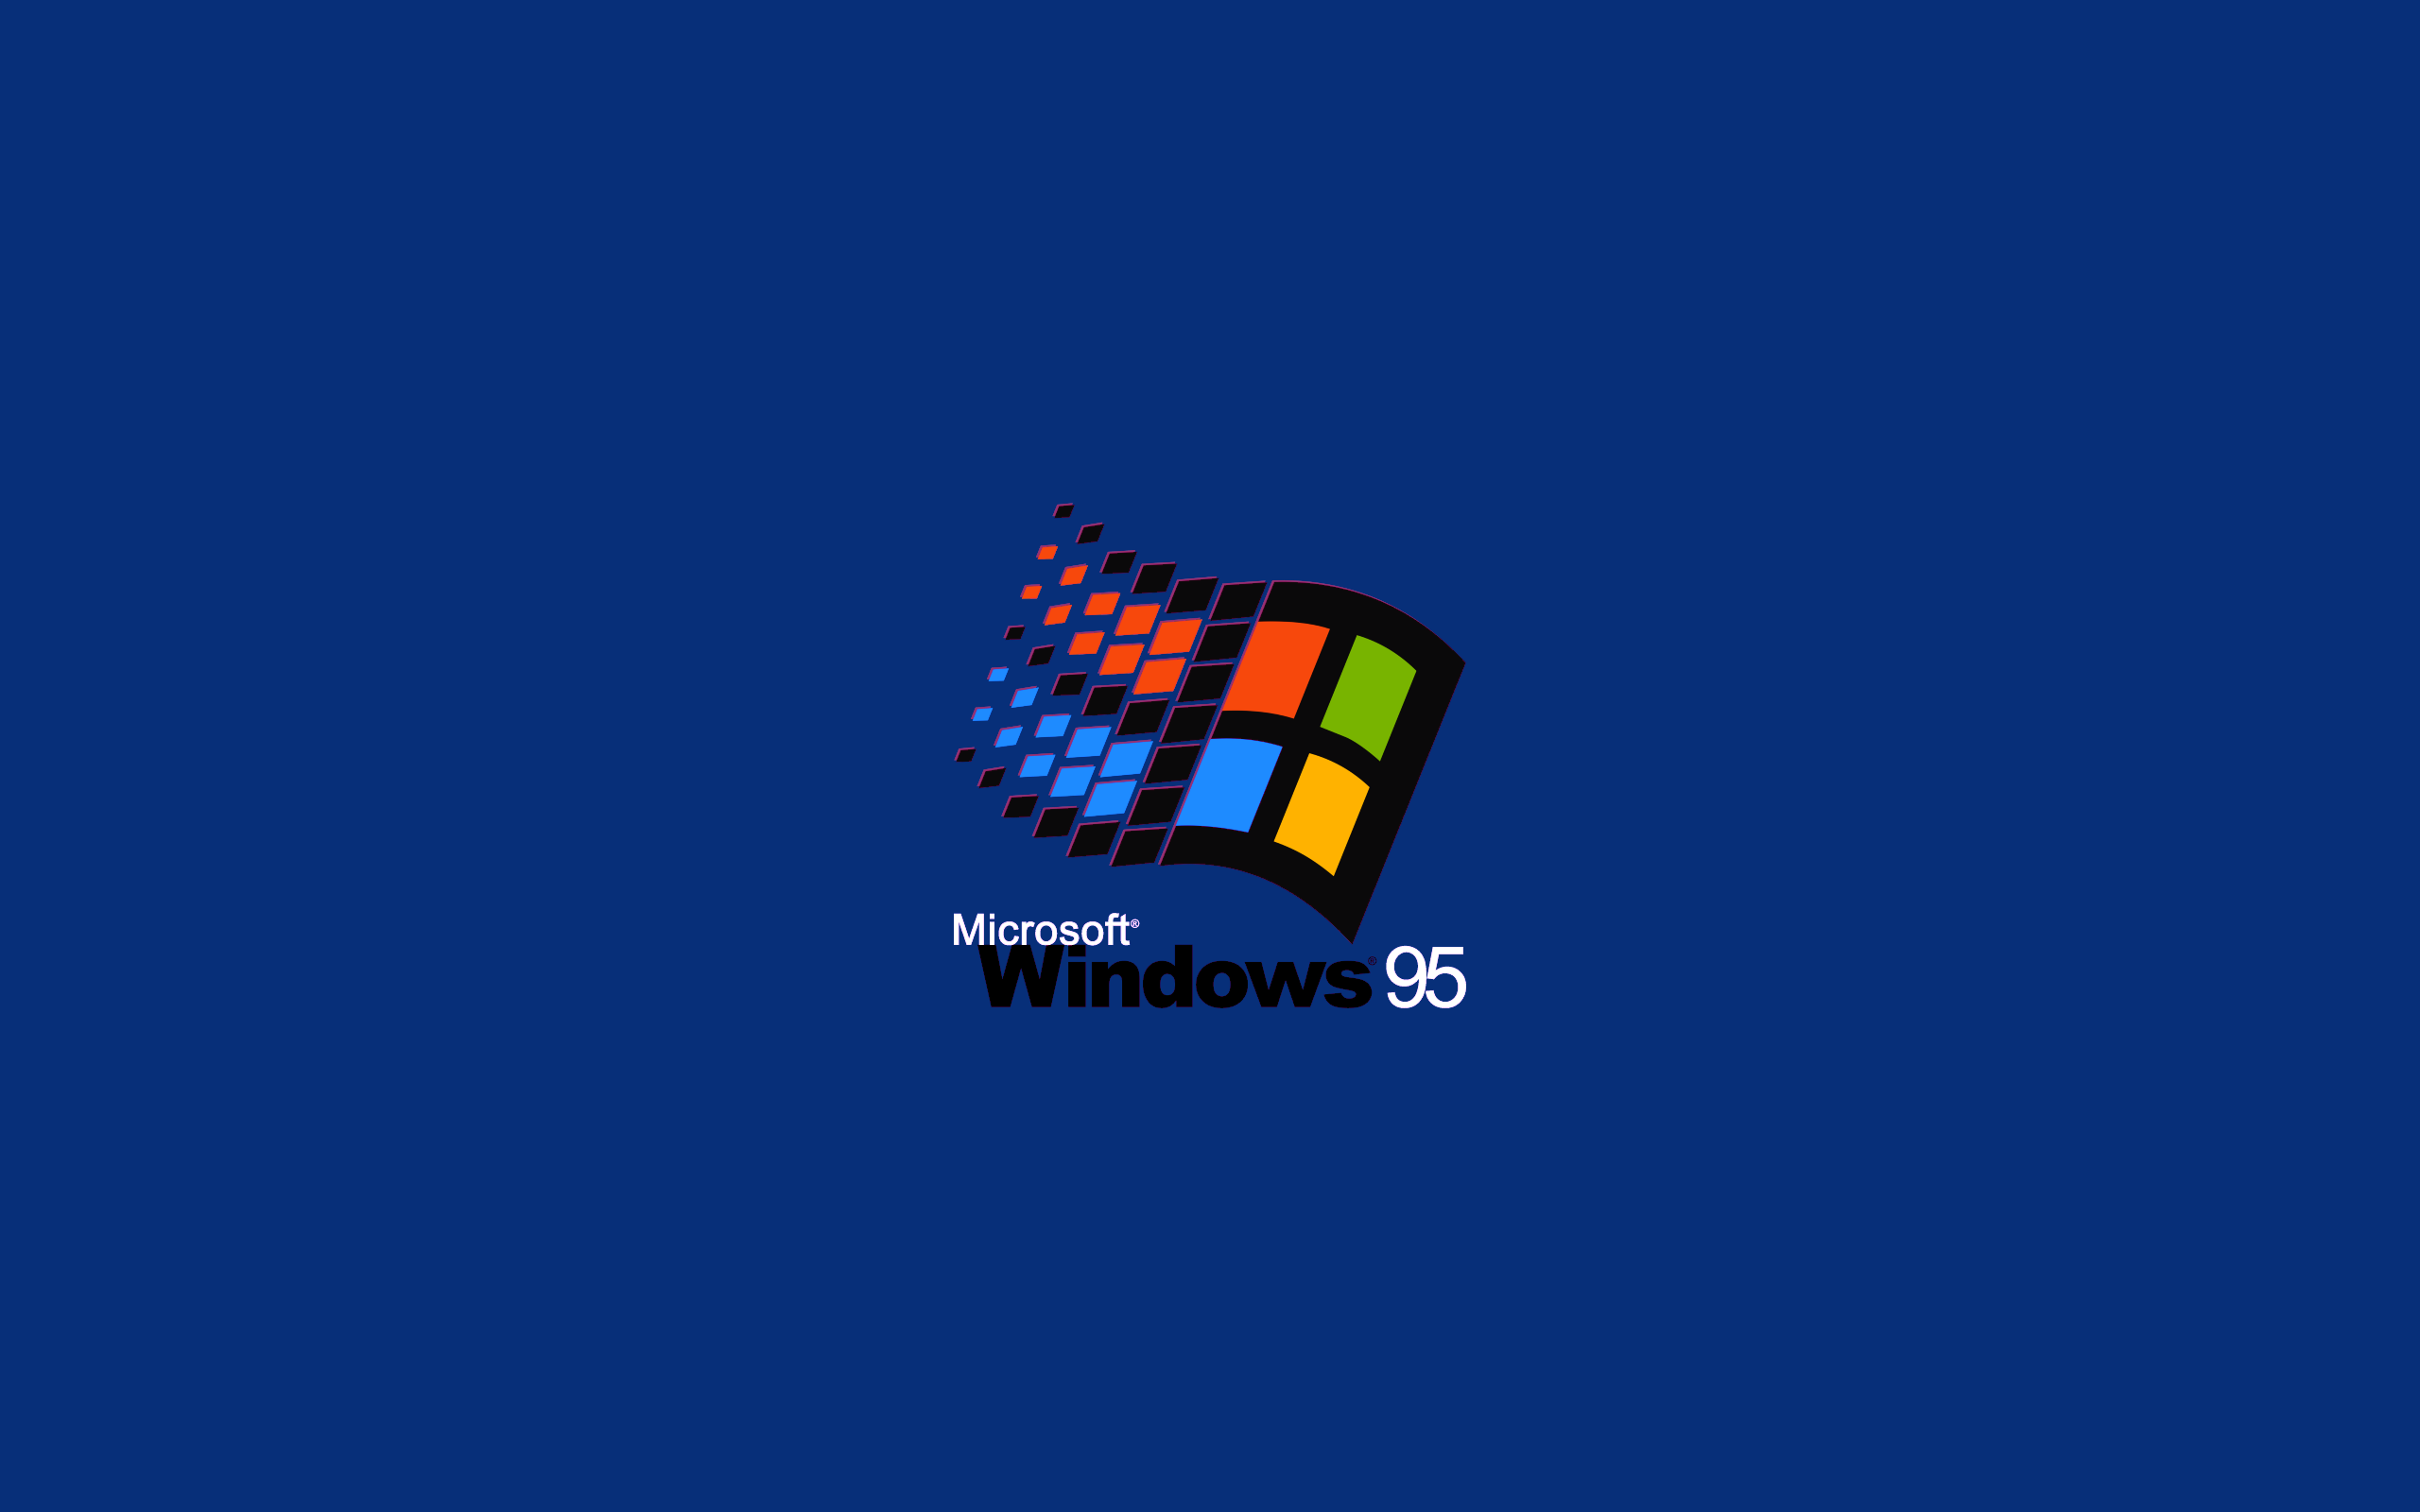 General 2560x1600 operating system logo minimalism Windows 95 simple background Microsoft blue background